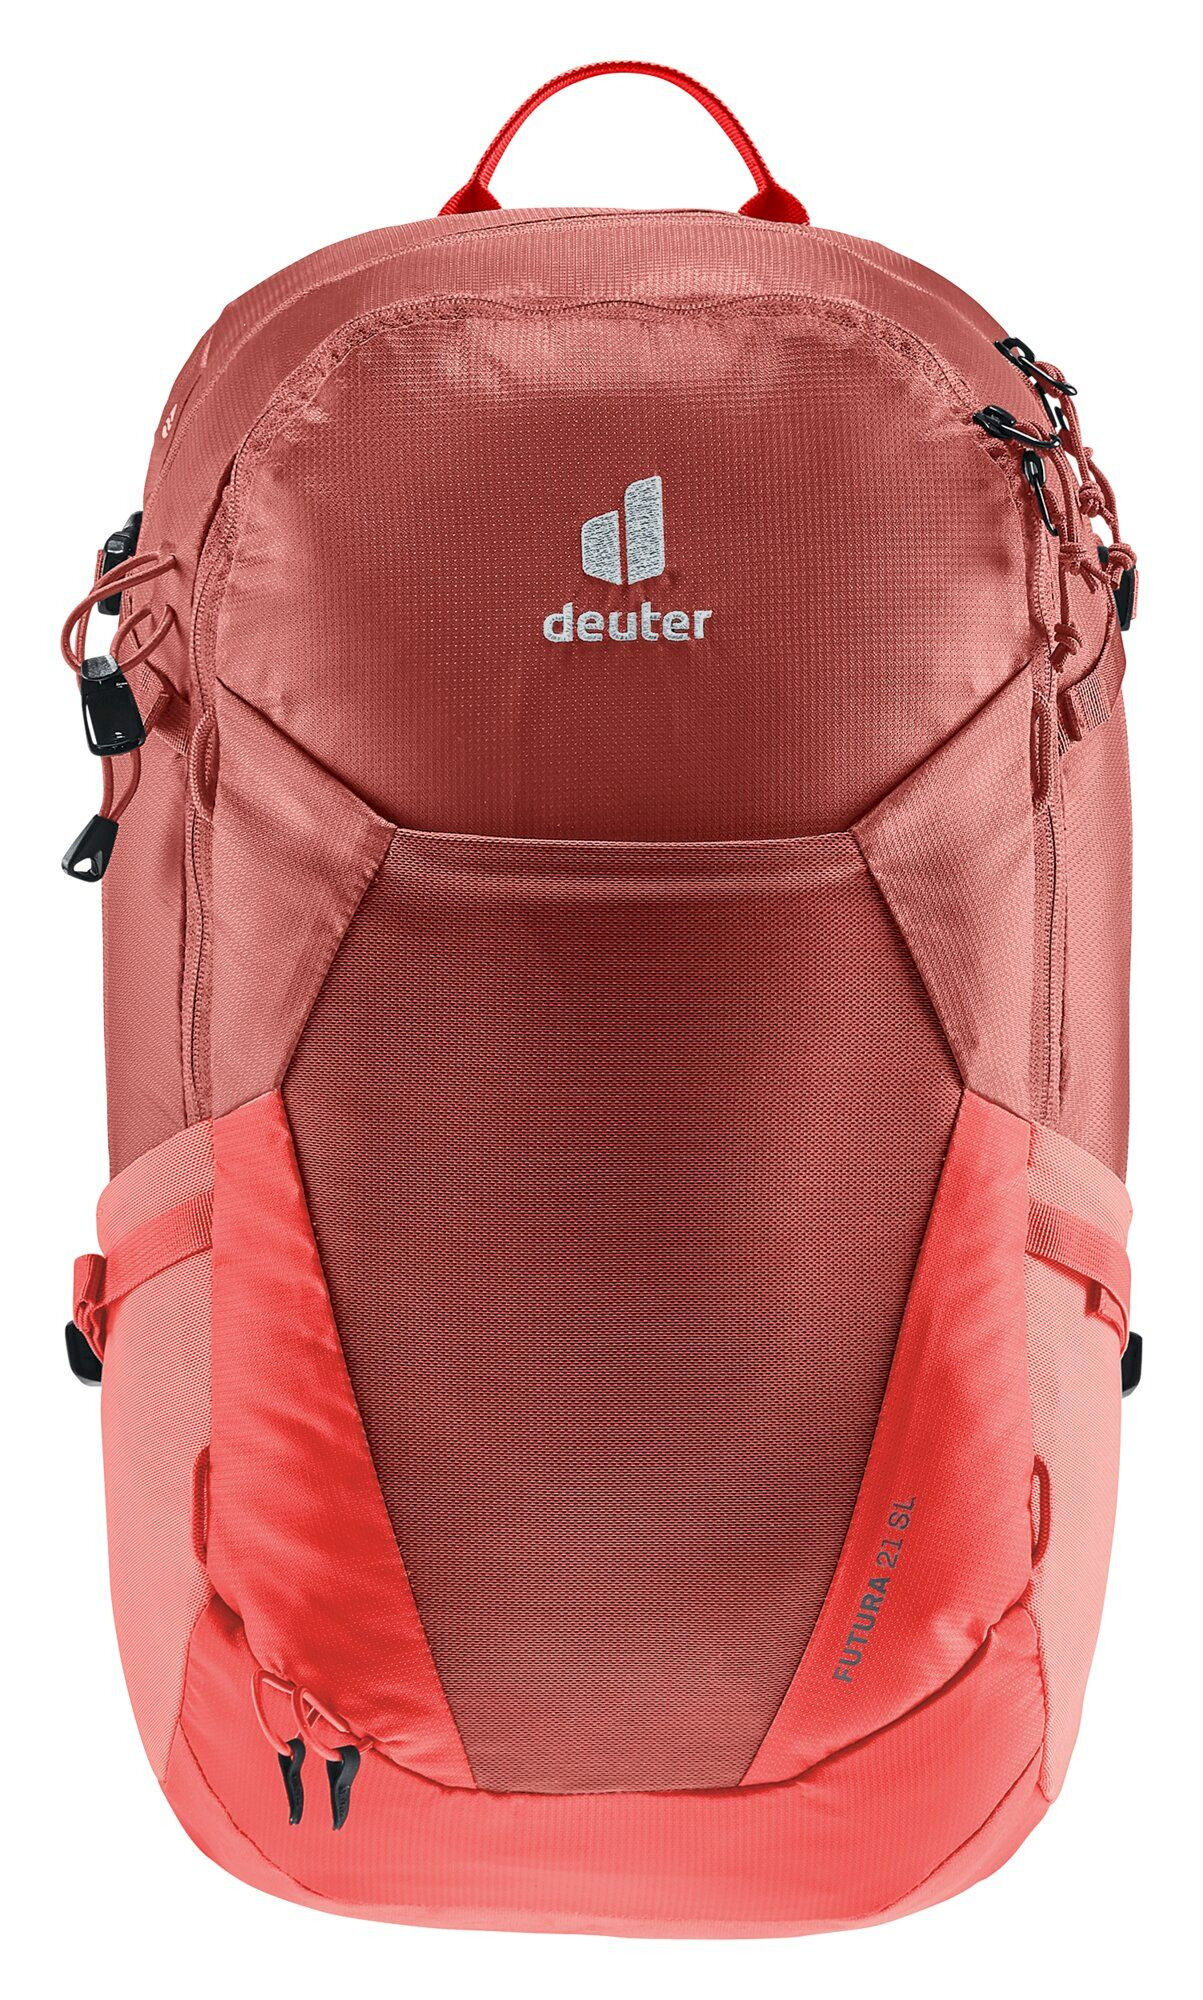 Deuter Futura 21 SL - Walking backpack - Women's